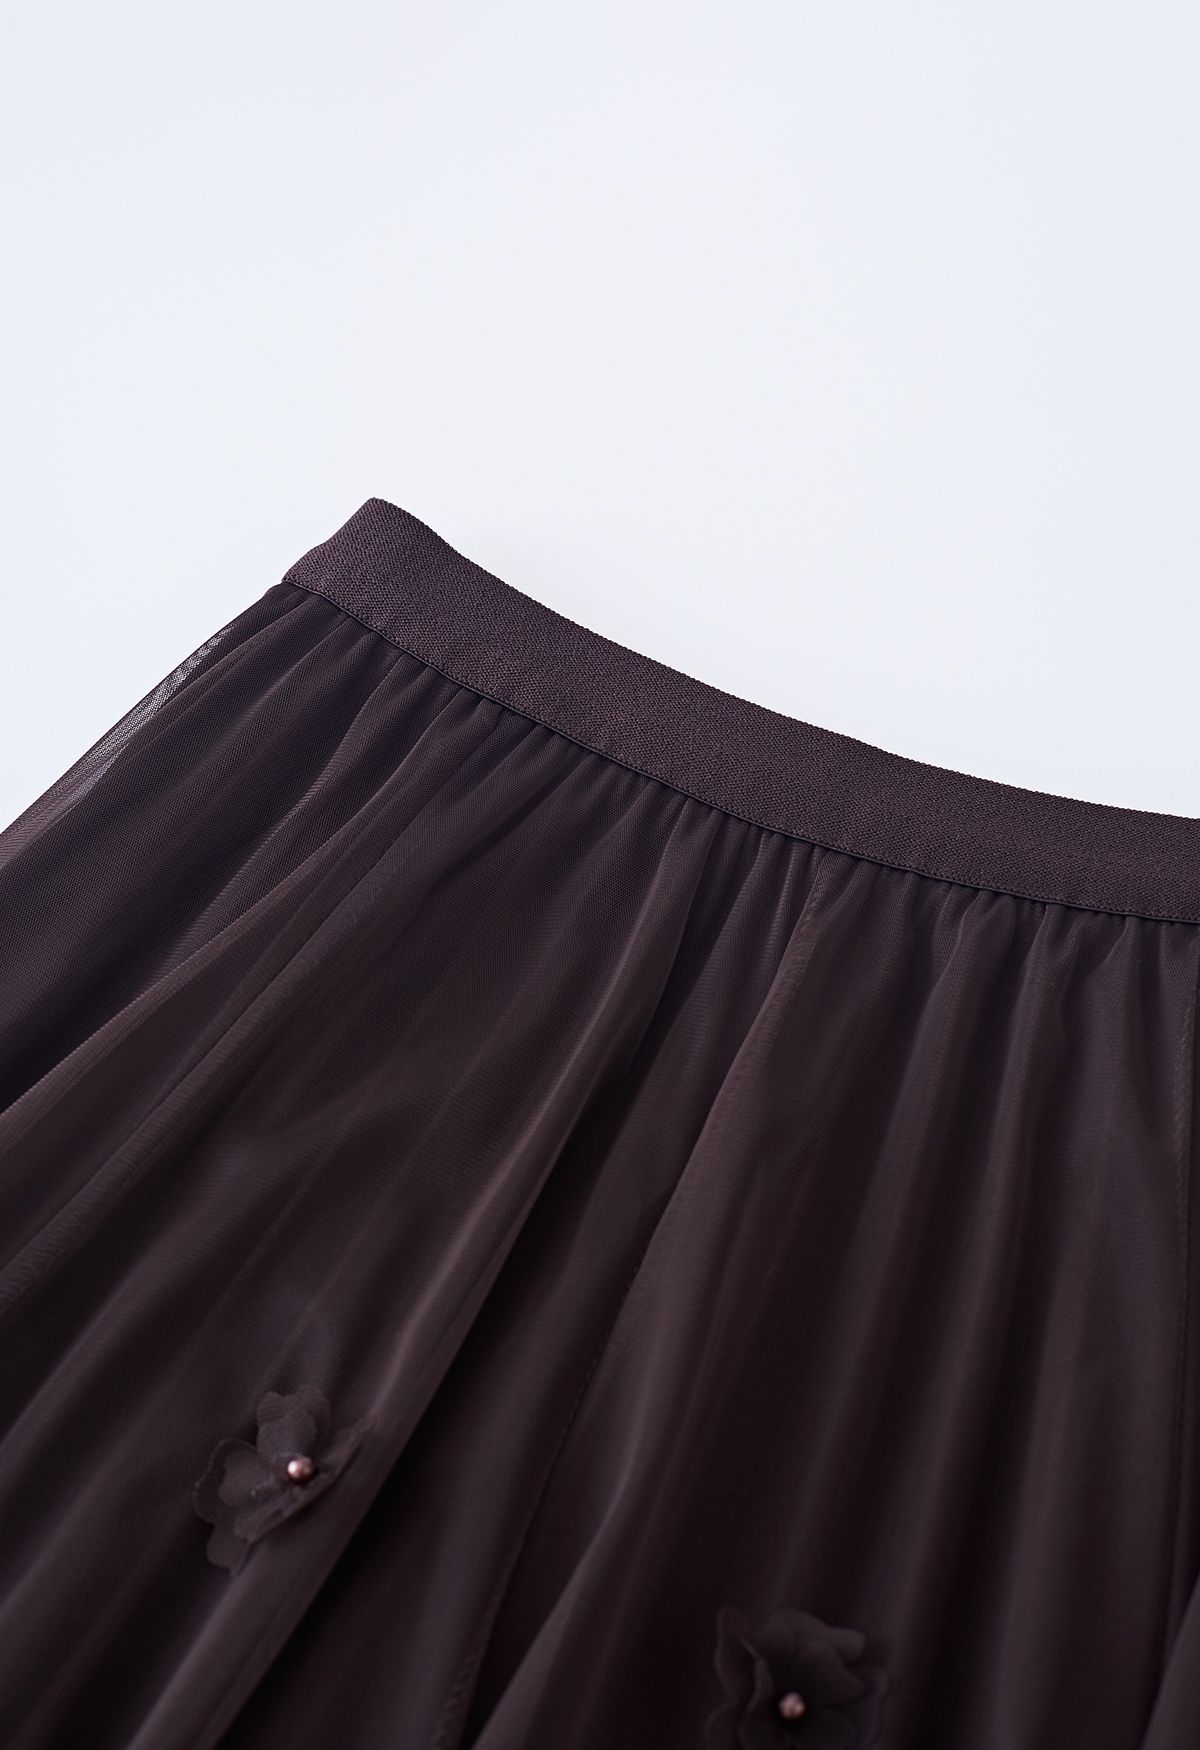 3D Flower Embellished Tulle Midi Skirt in Brown